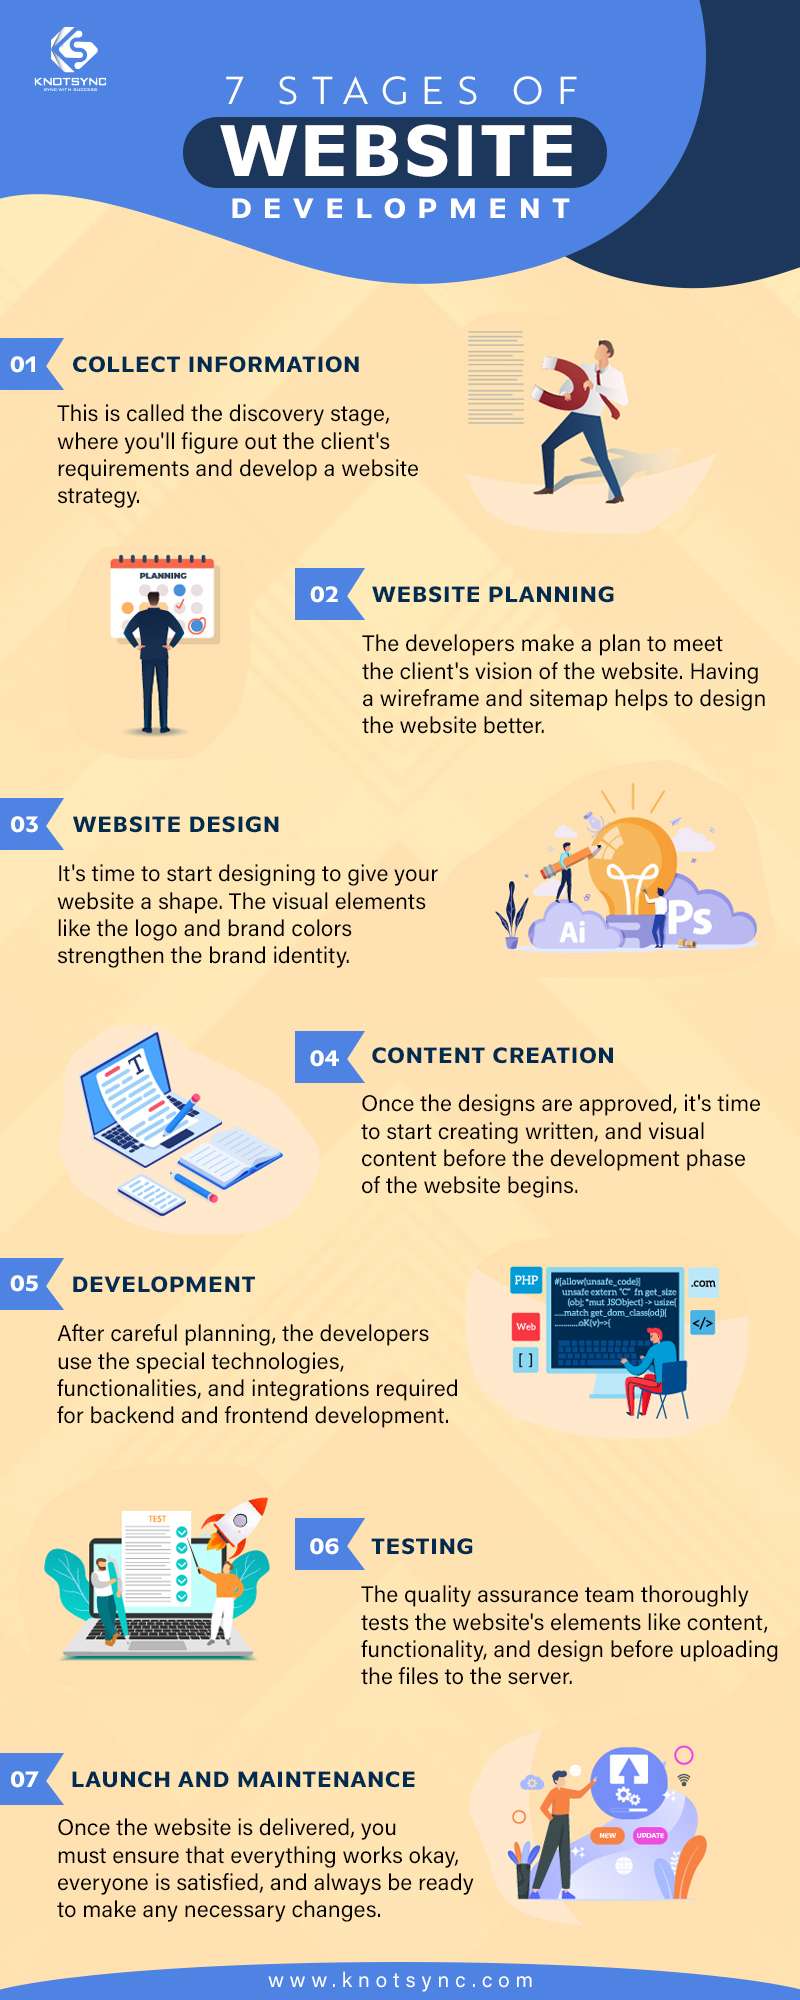 stages of website development